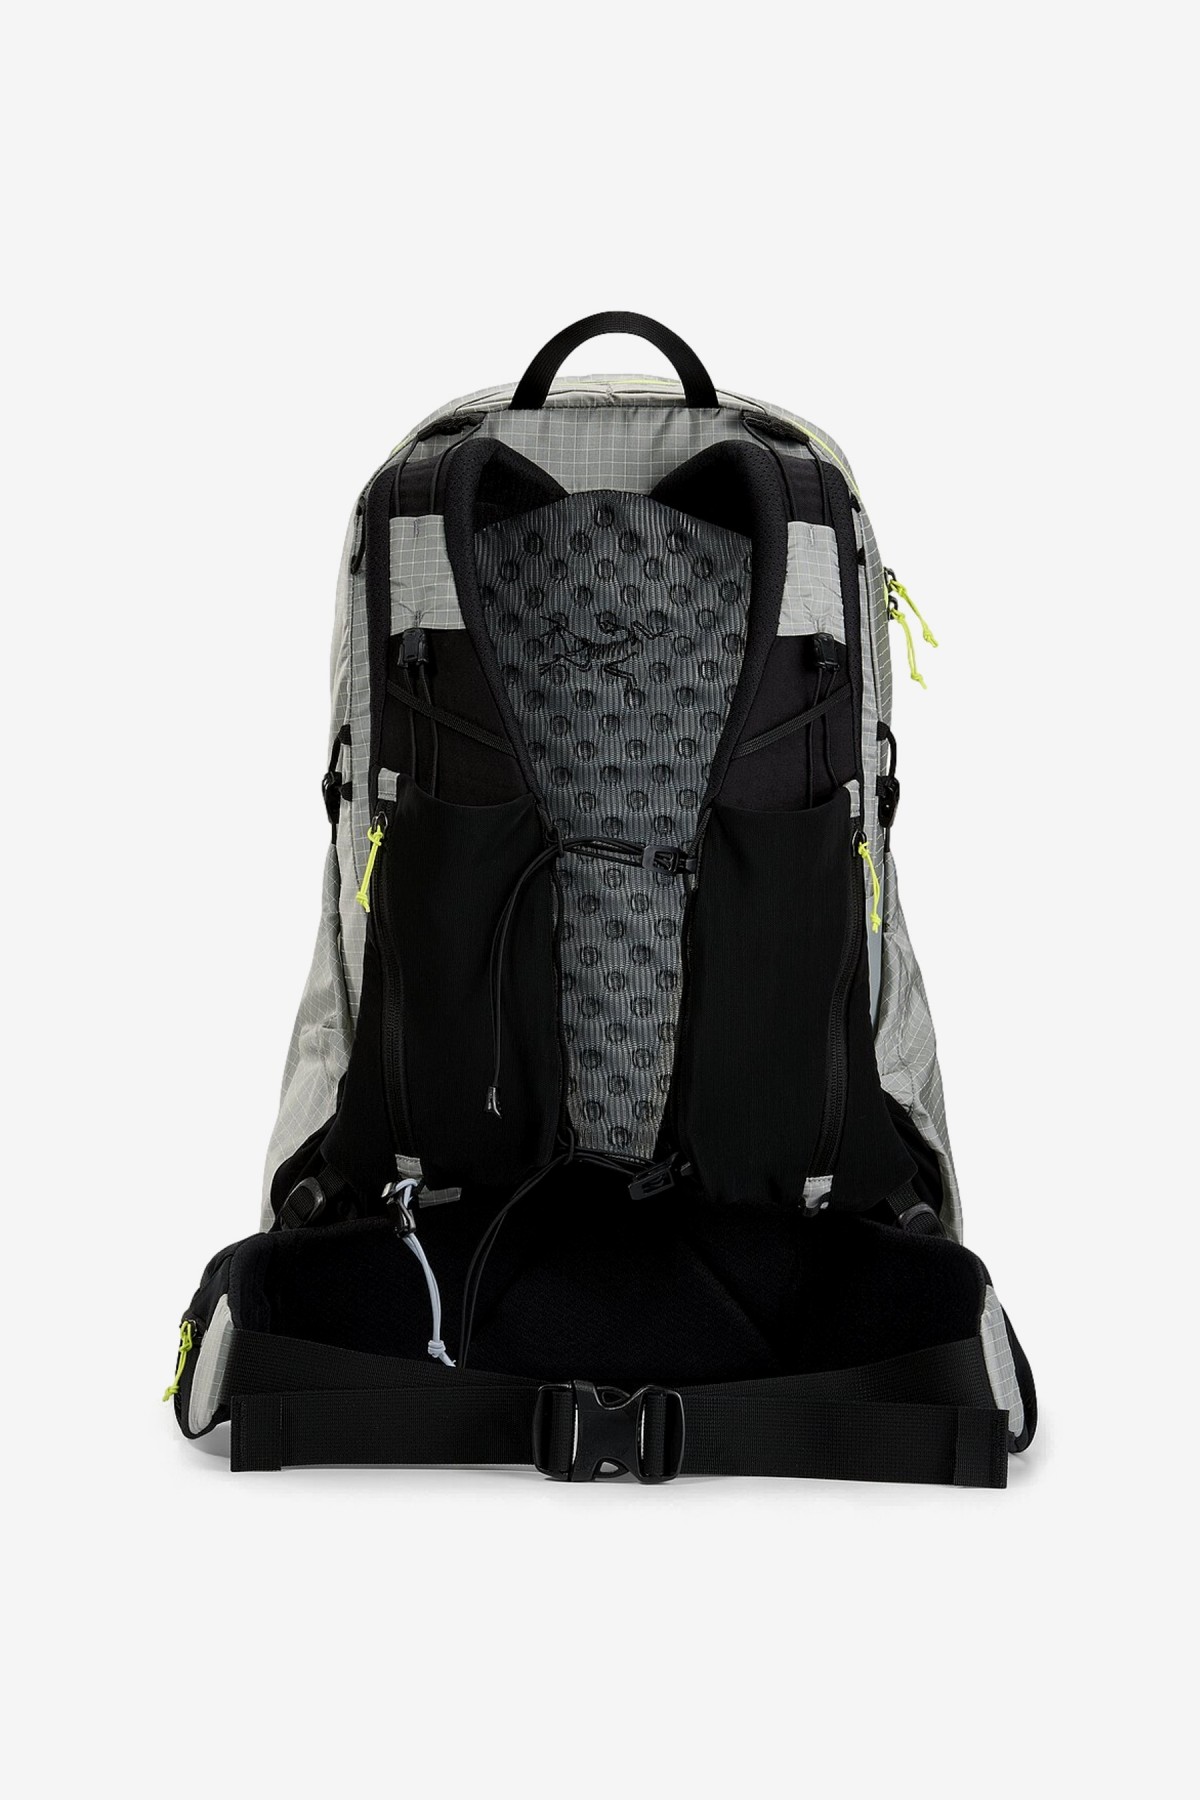 Arc'teryx Aerios 30 Backpack in Pixel/Sprint